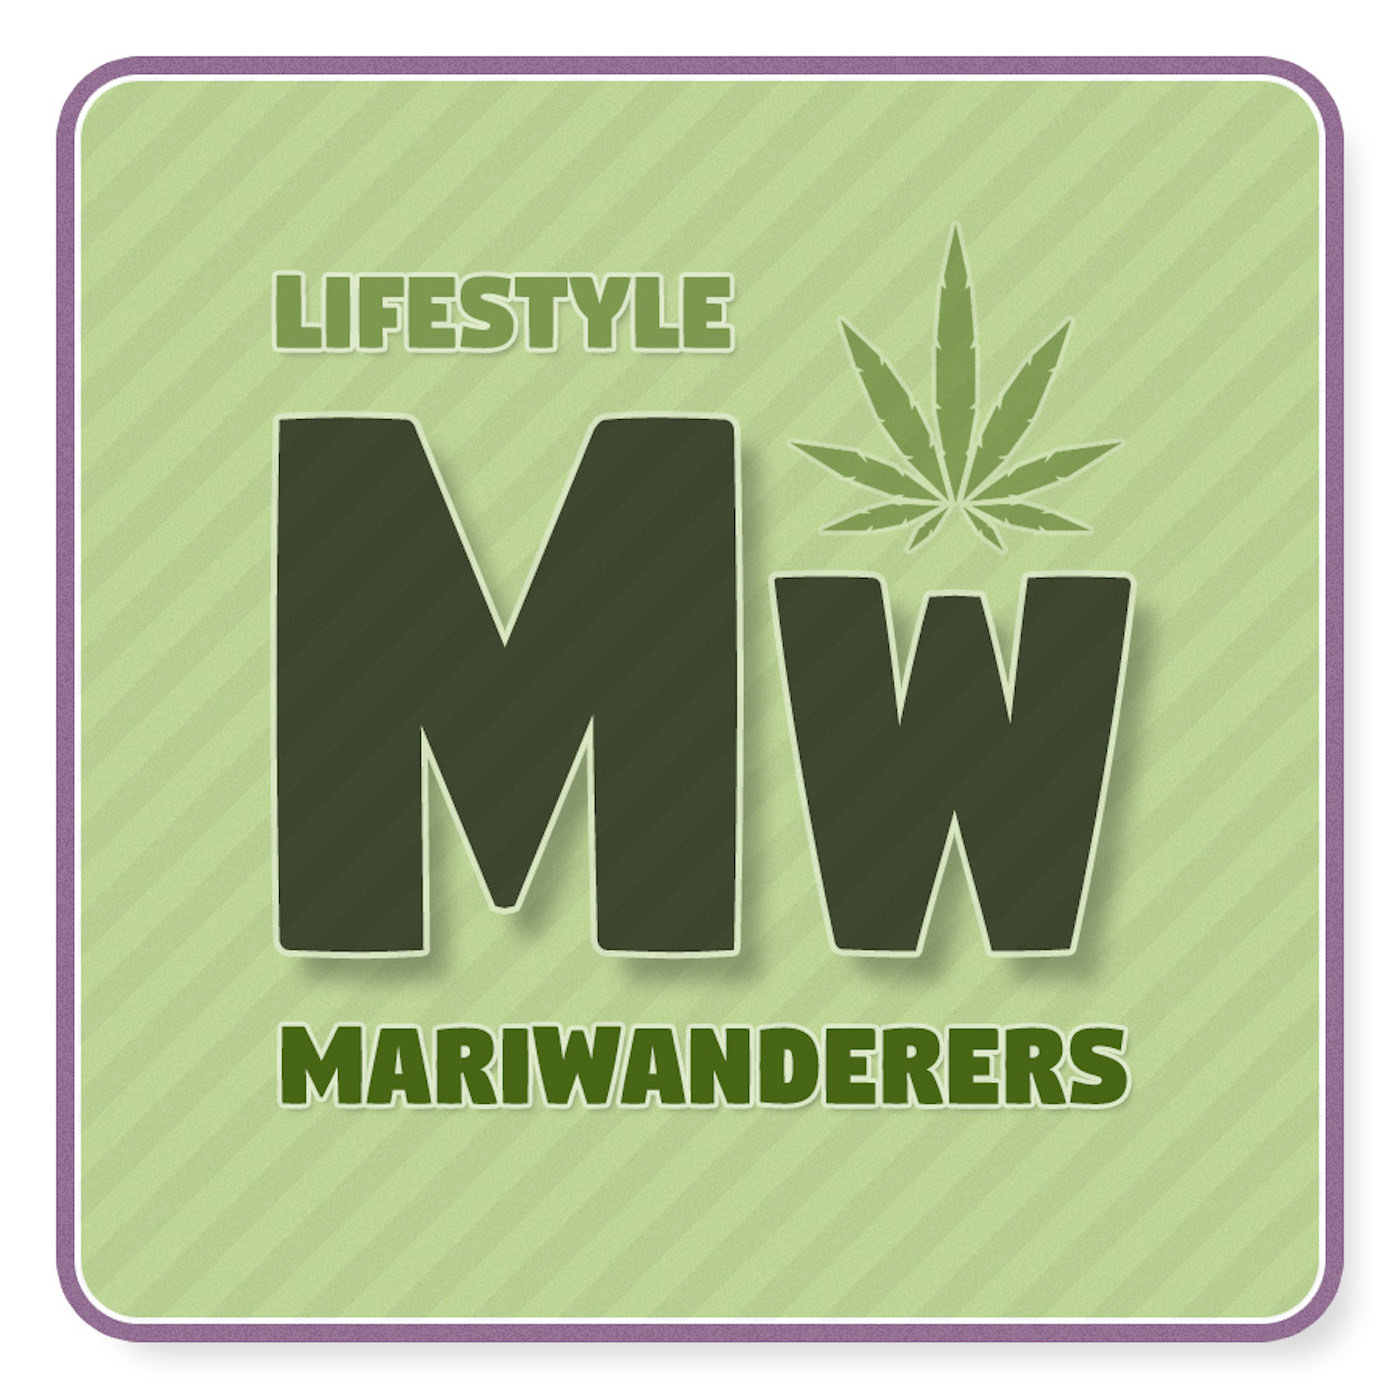 The Mariwanderers - "The Tiddakers" Season 2 - Episode #3